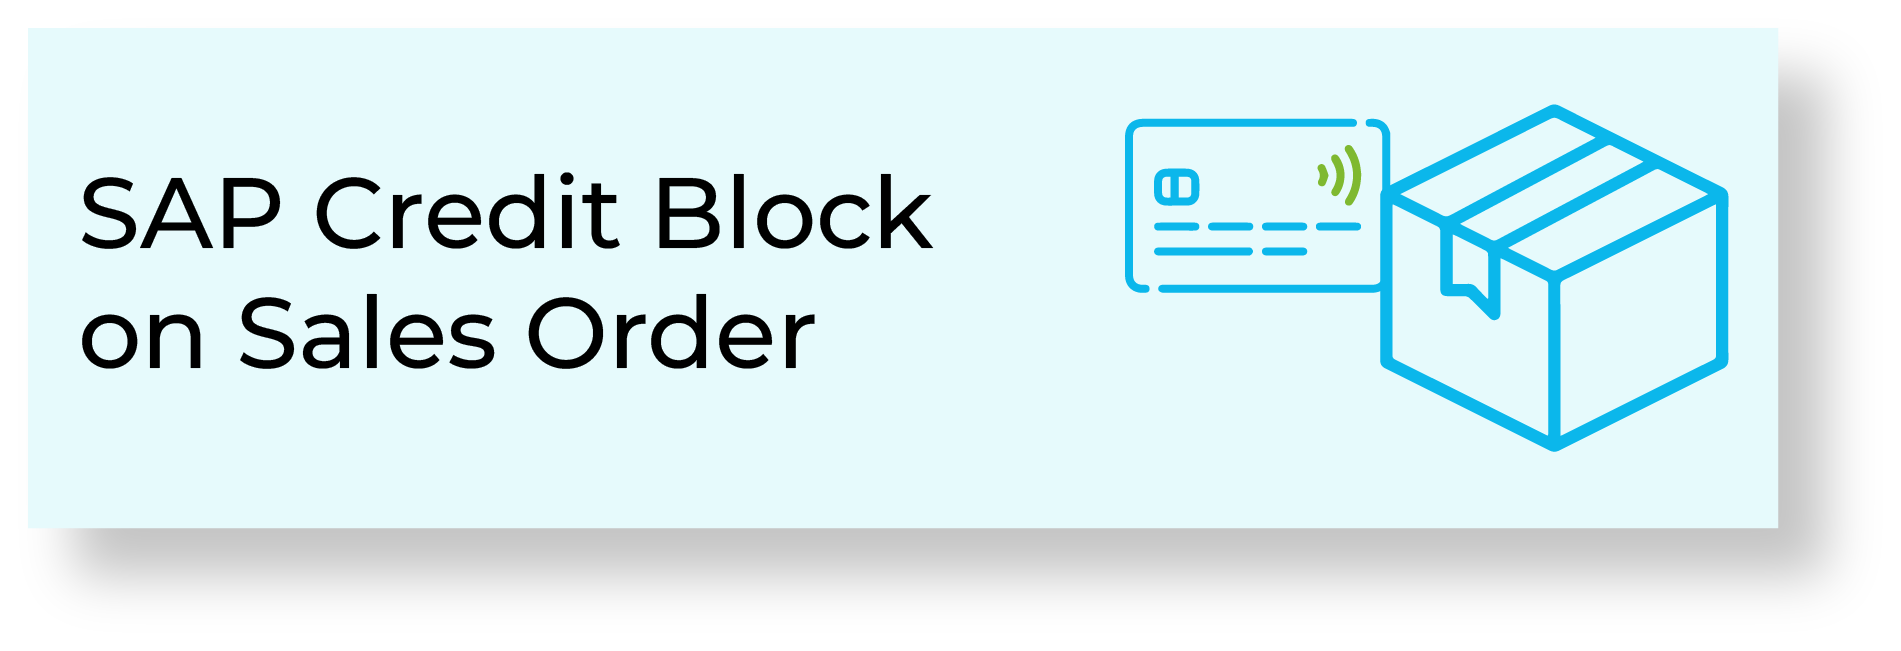 SAP Credit Block on Sales Order